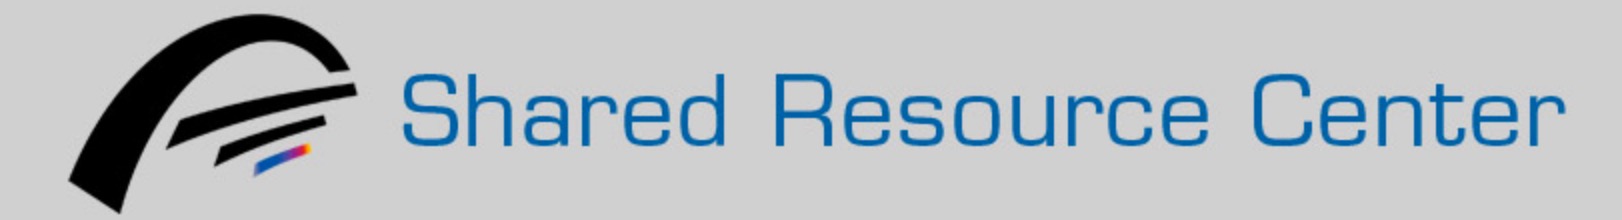 Shared Resource Center logo